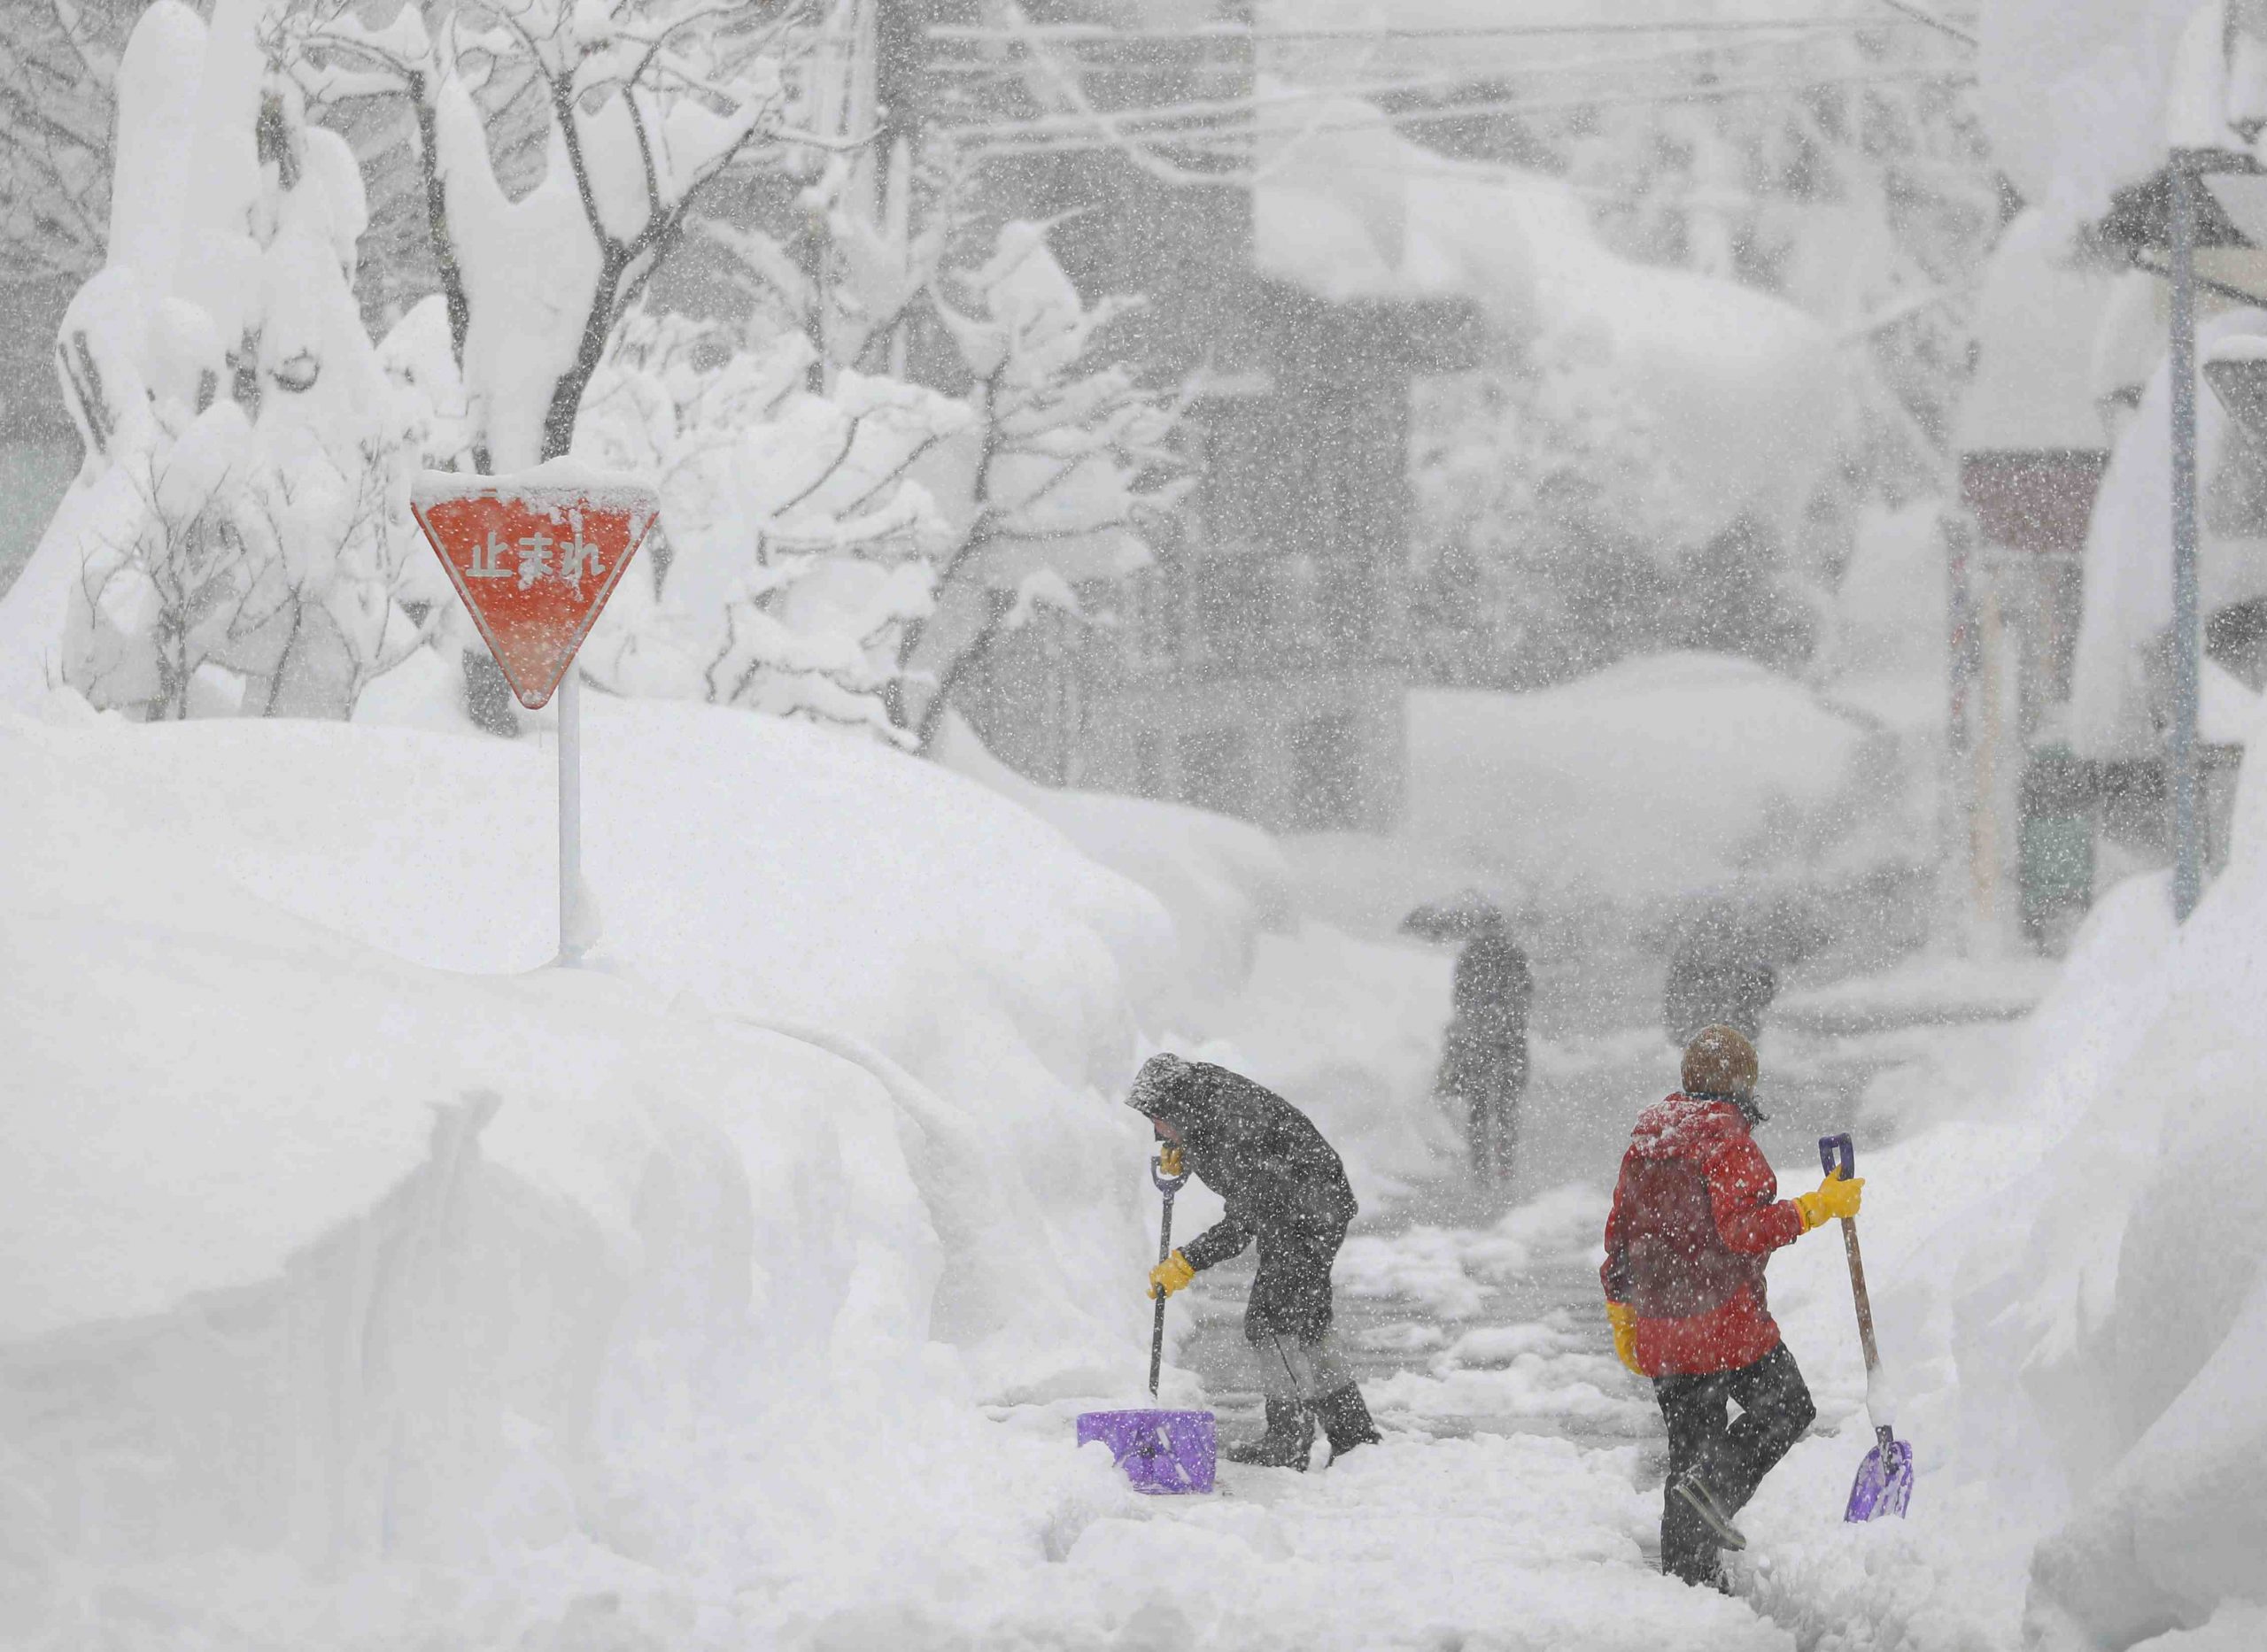 Record snowfall hits western Japan causing severe delays